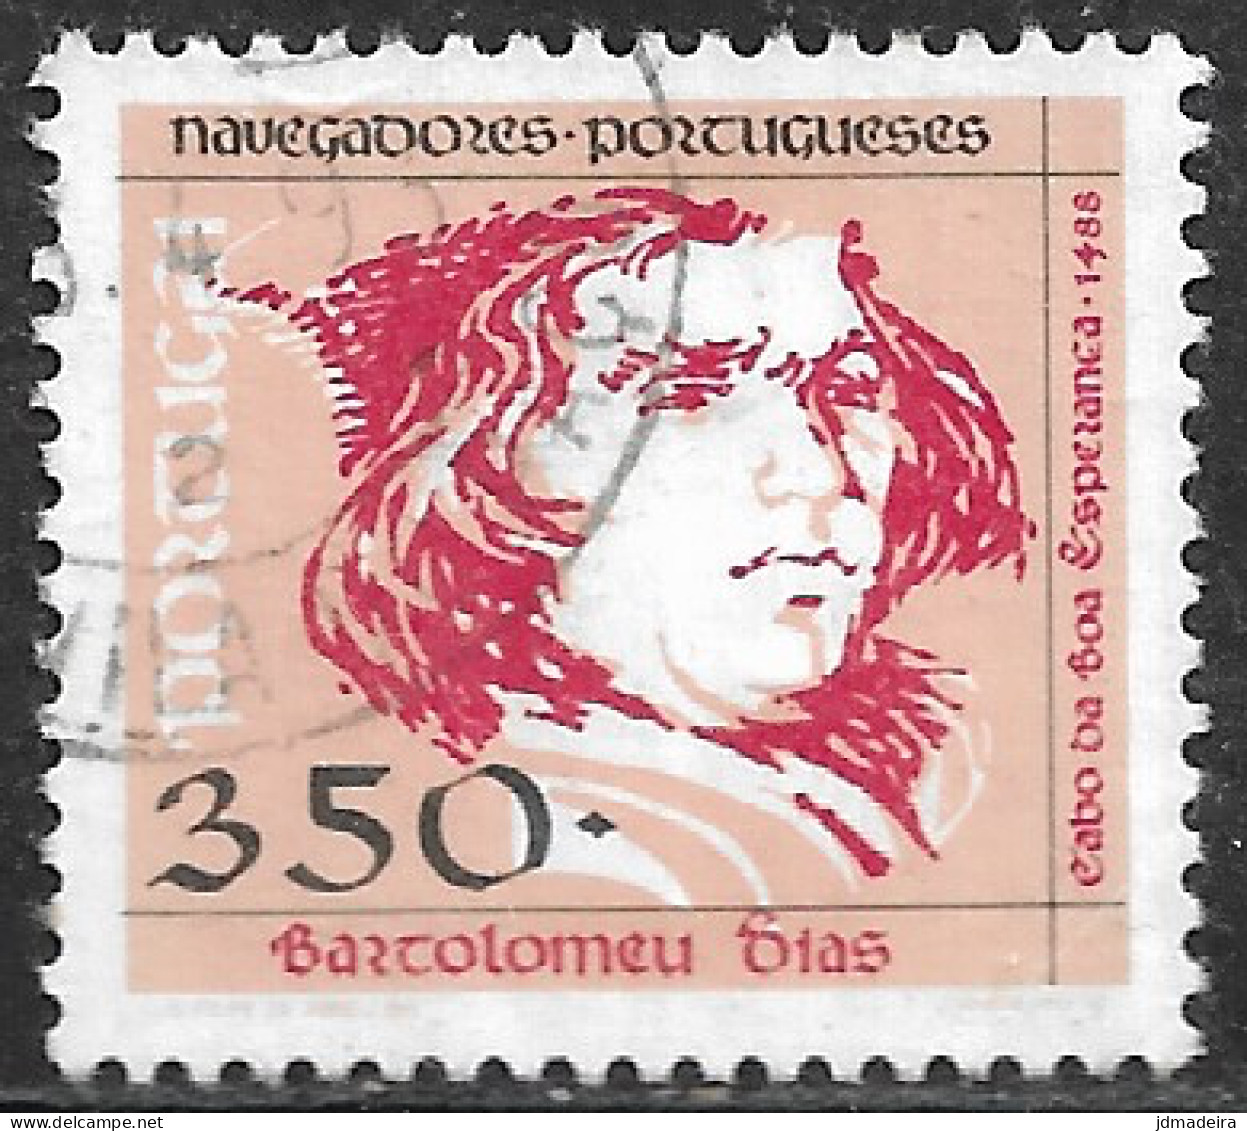 Portugal – 1992 Portuguese Navigators 350. Used Stamp - Usado